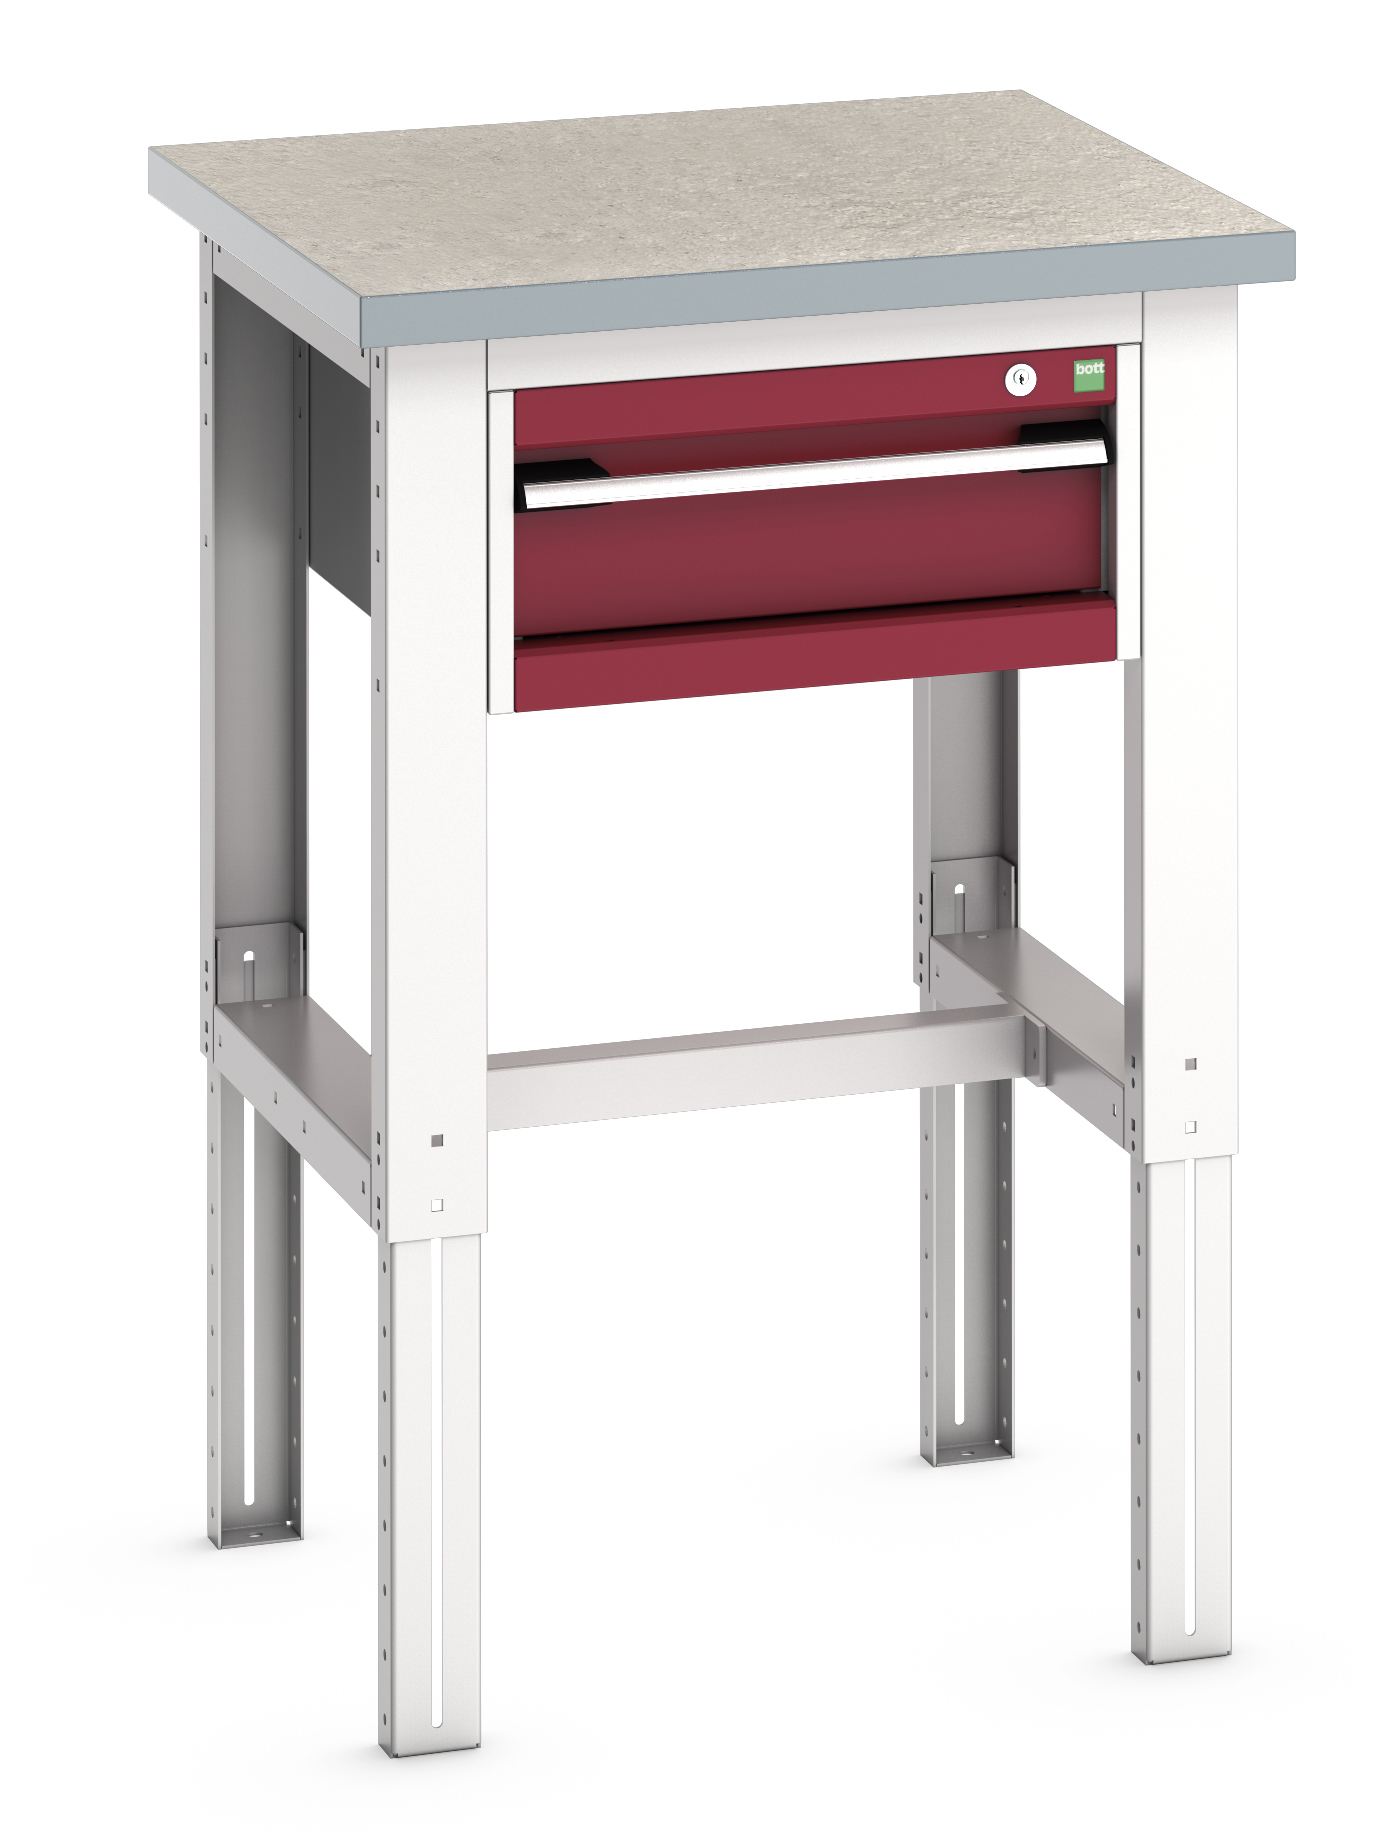 Bott Cubio Adjustable Height Workstand With 1 Drawer Cabinet - 41003532.24V